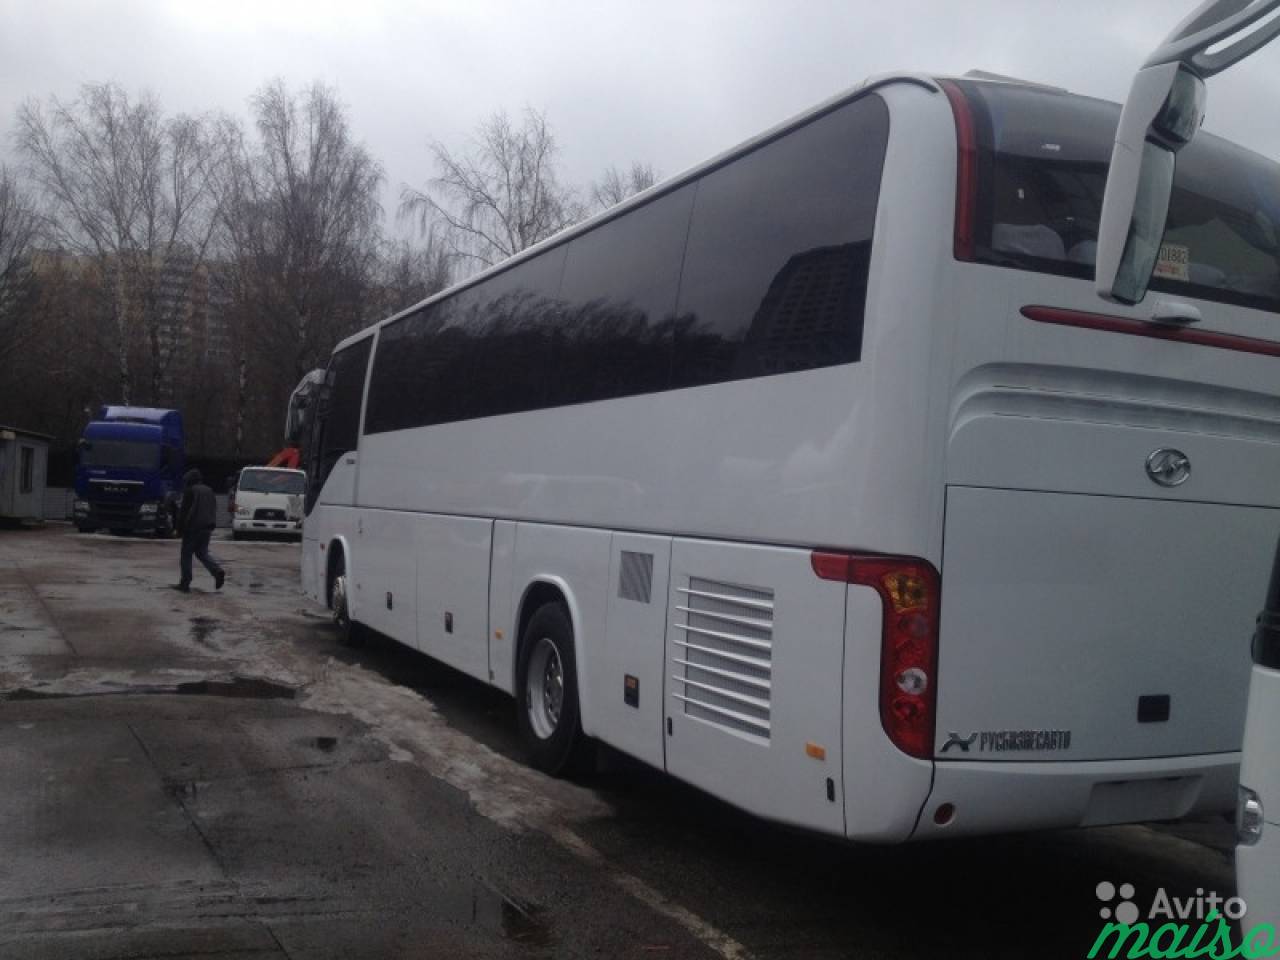 Автобус Хайгер 6129 47+1+1 (холод,куллер, WC) в Санкт-Петербурге. Фото 2